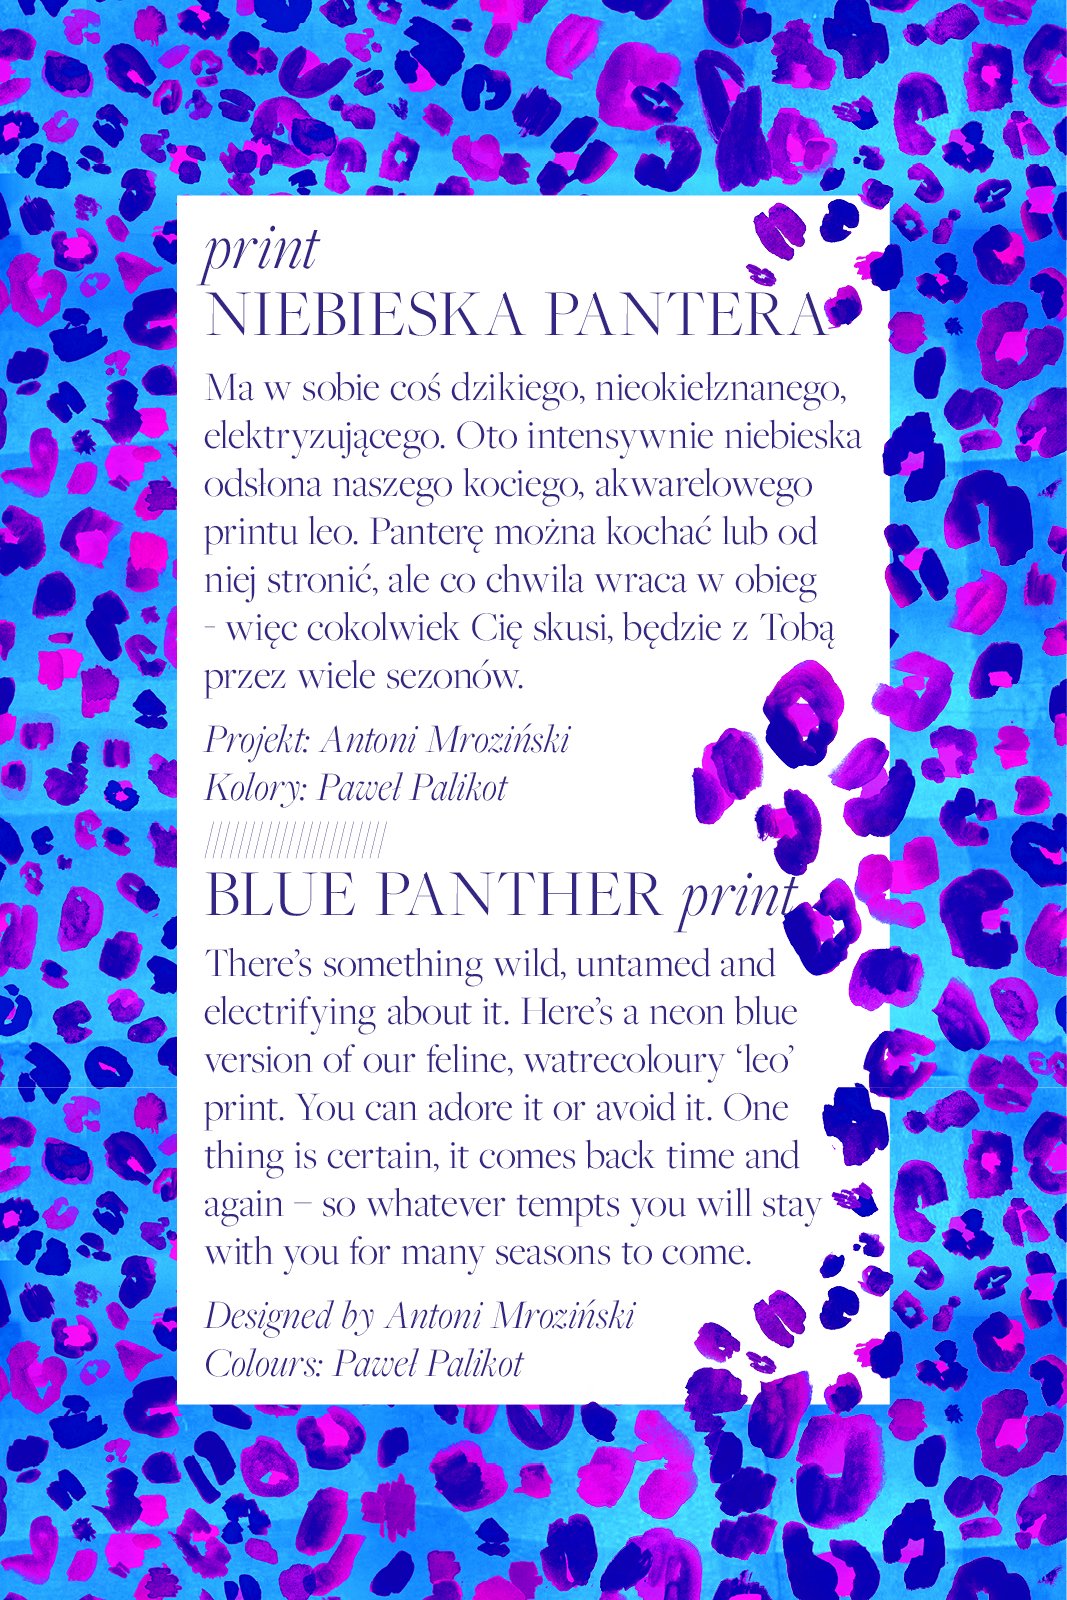 PETARDA print niebieska pantera